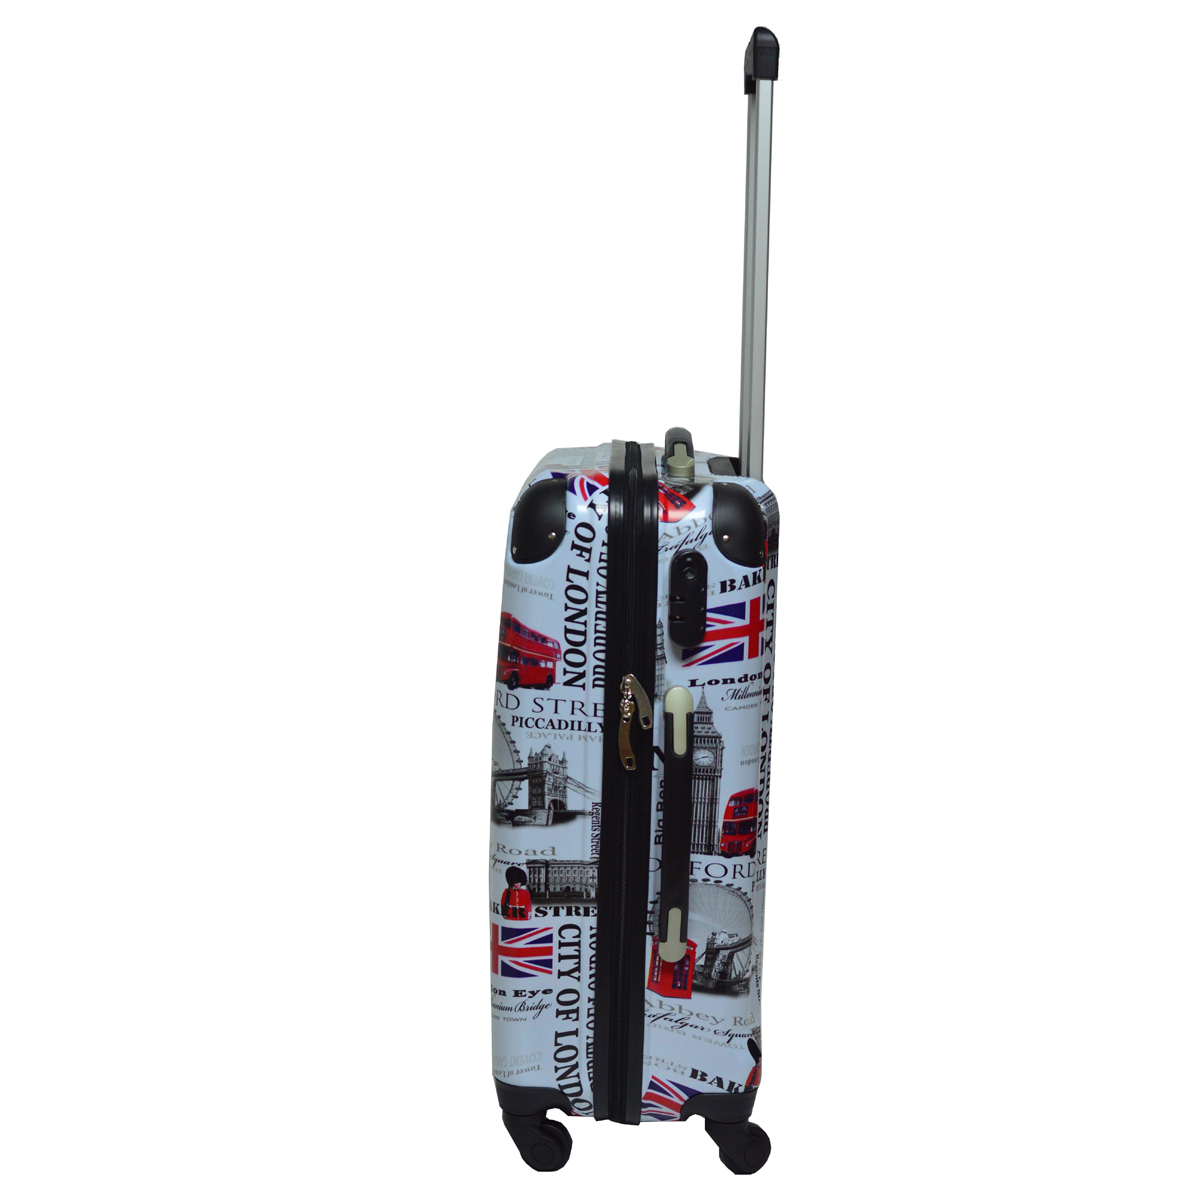 Rolling upright trolley luggage